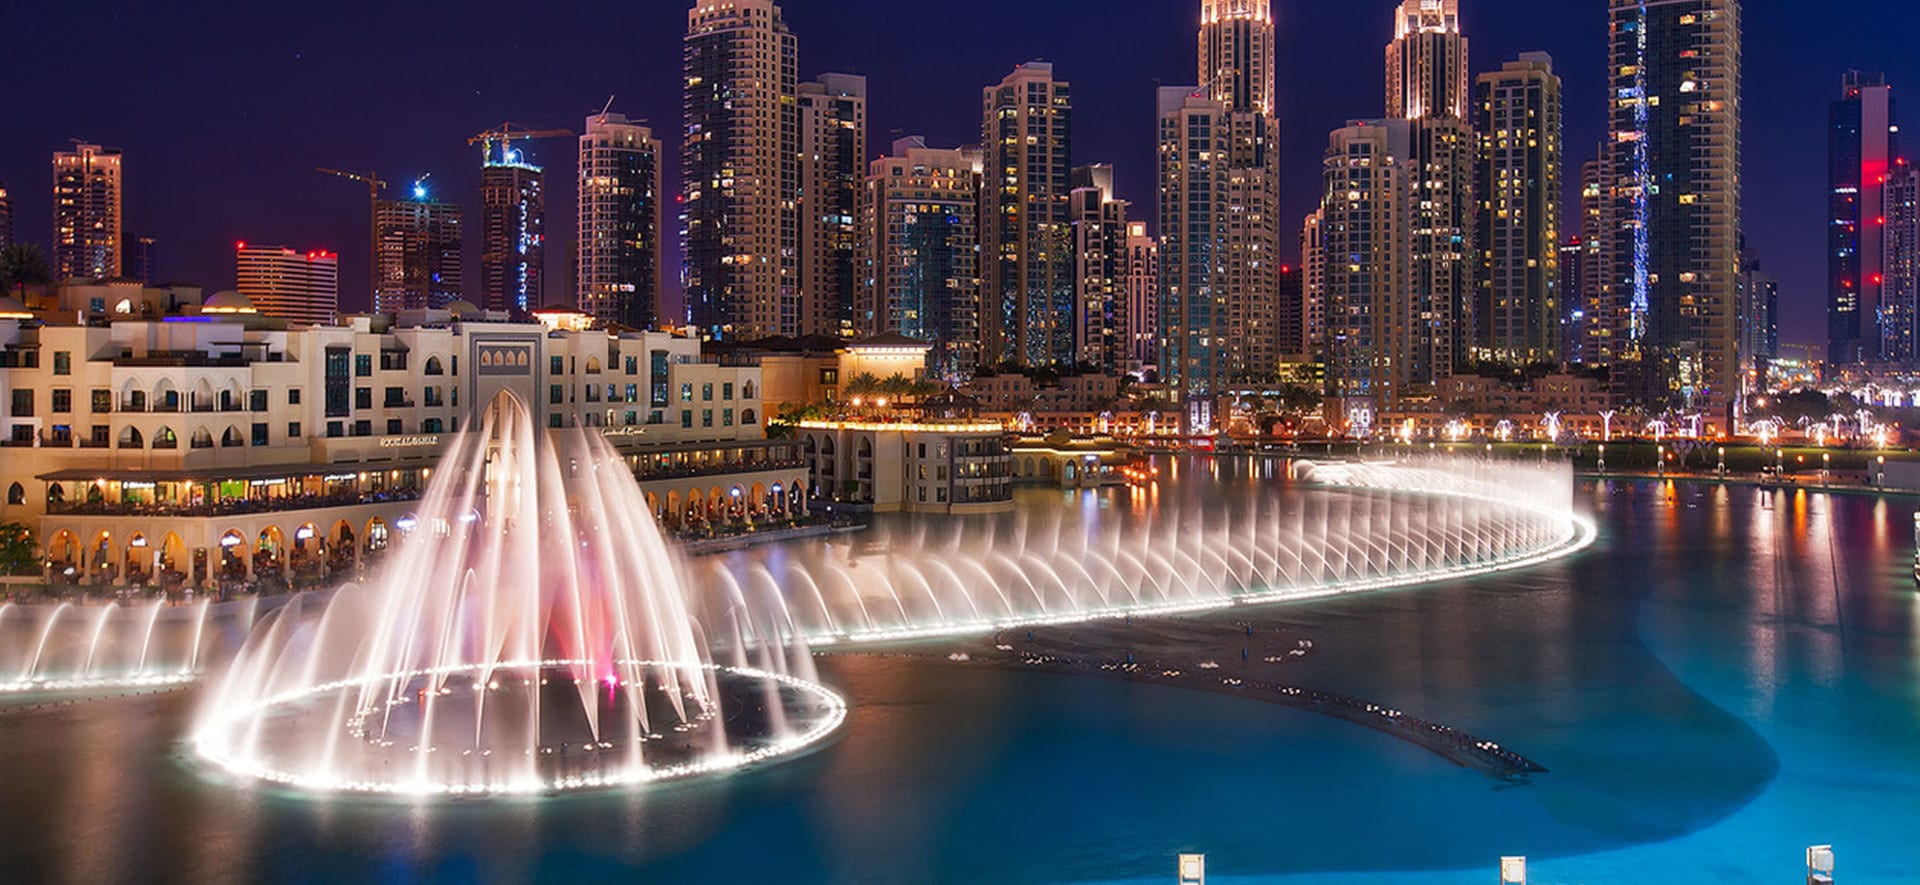 Dubai Fountain show timing & pricing